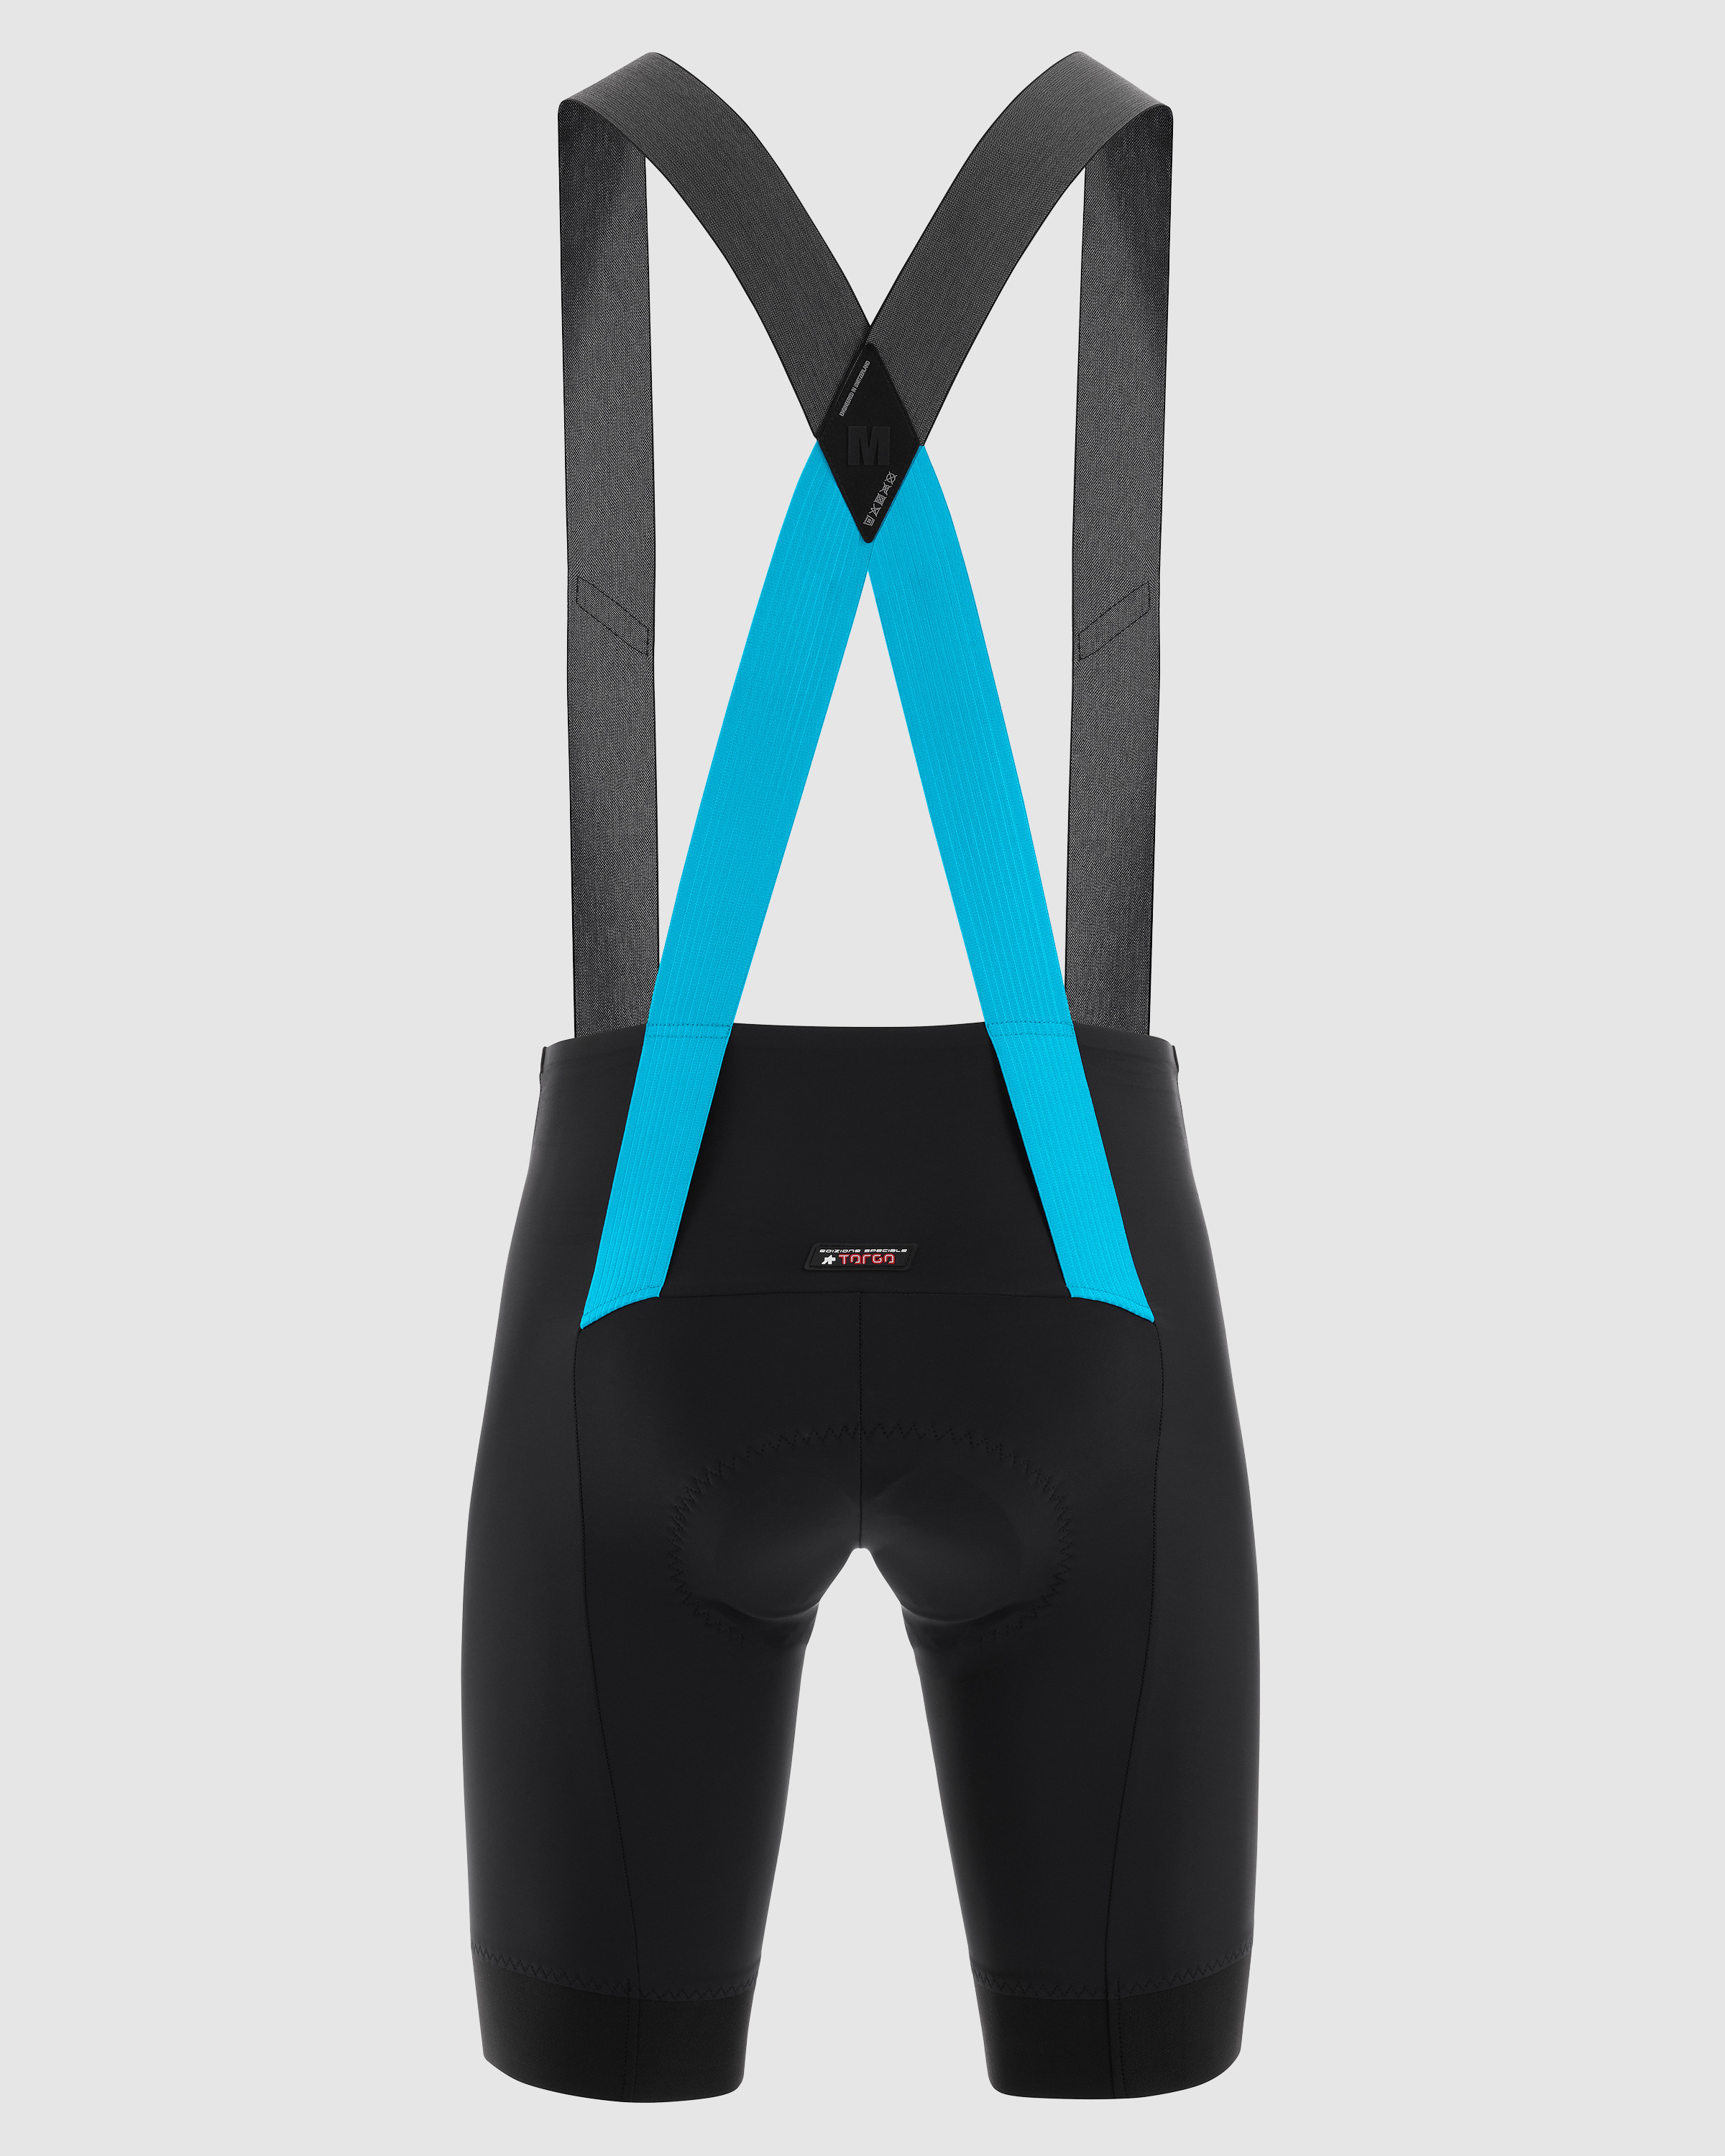 EQUIPE RS BIB Shorts S9 TARGA - ASSOS Of Switzerland - Official Outlet